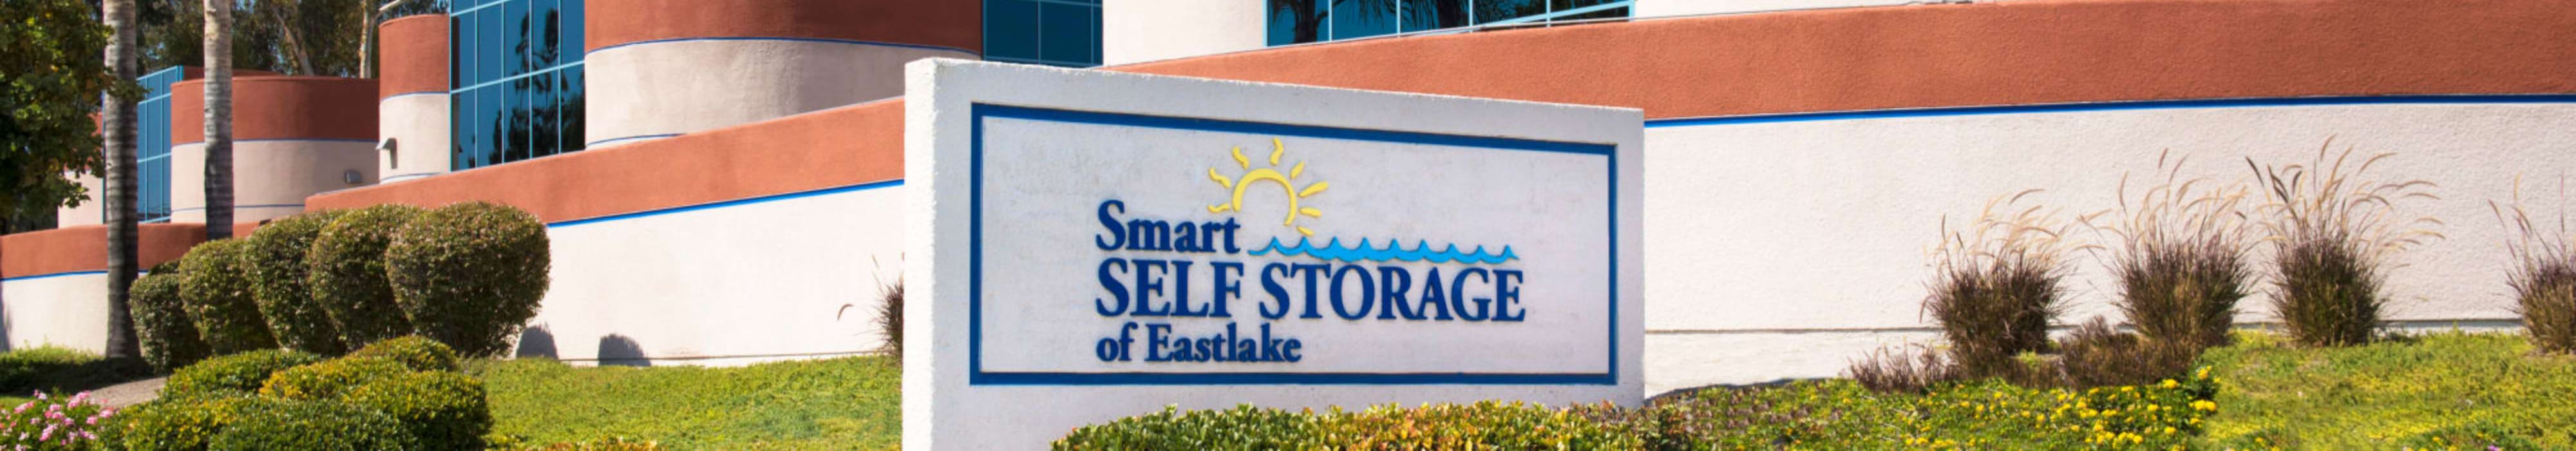 Branding on the exterior of Smart Self Storage of Eastlake in Chula Vista, California